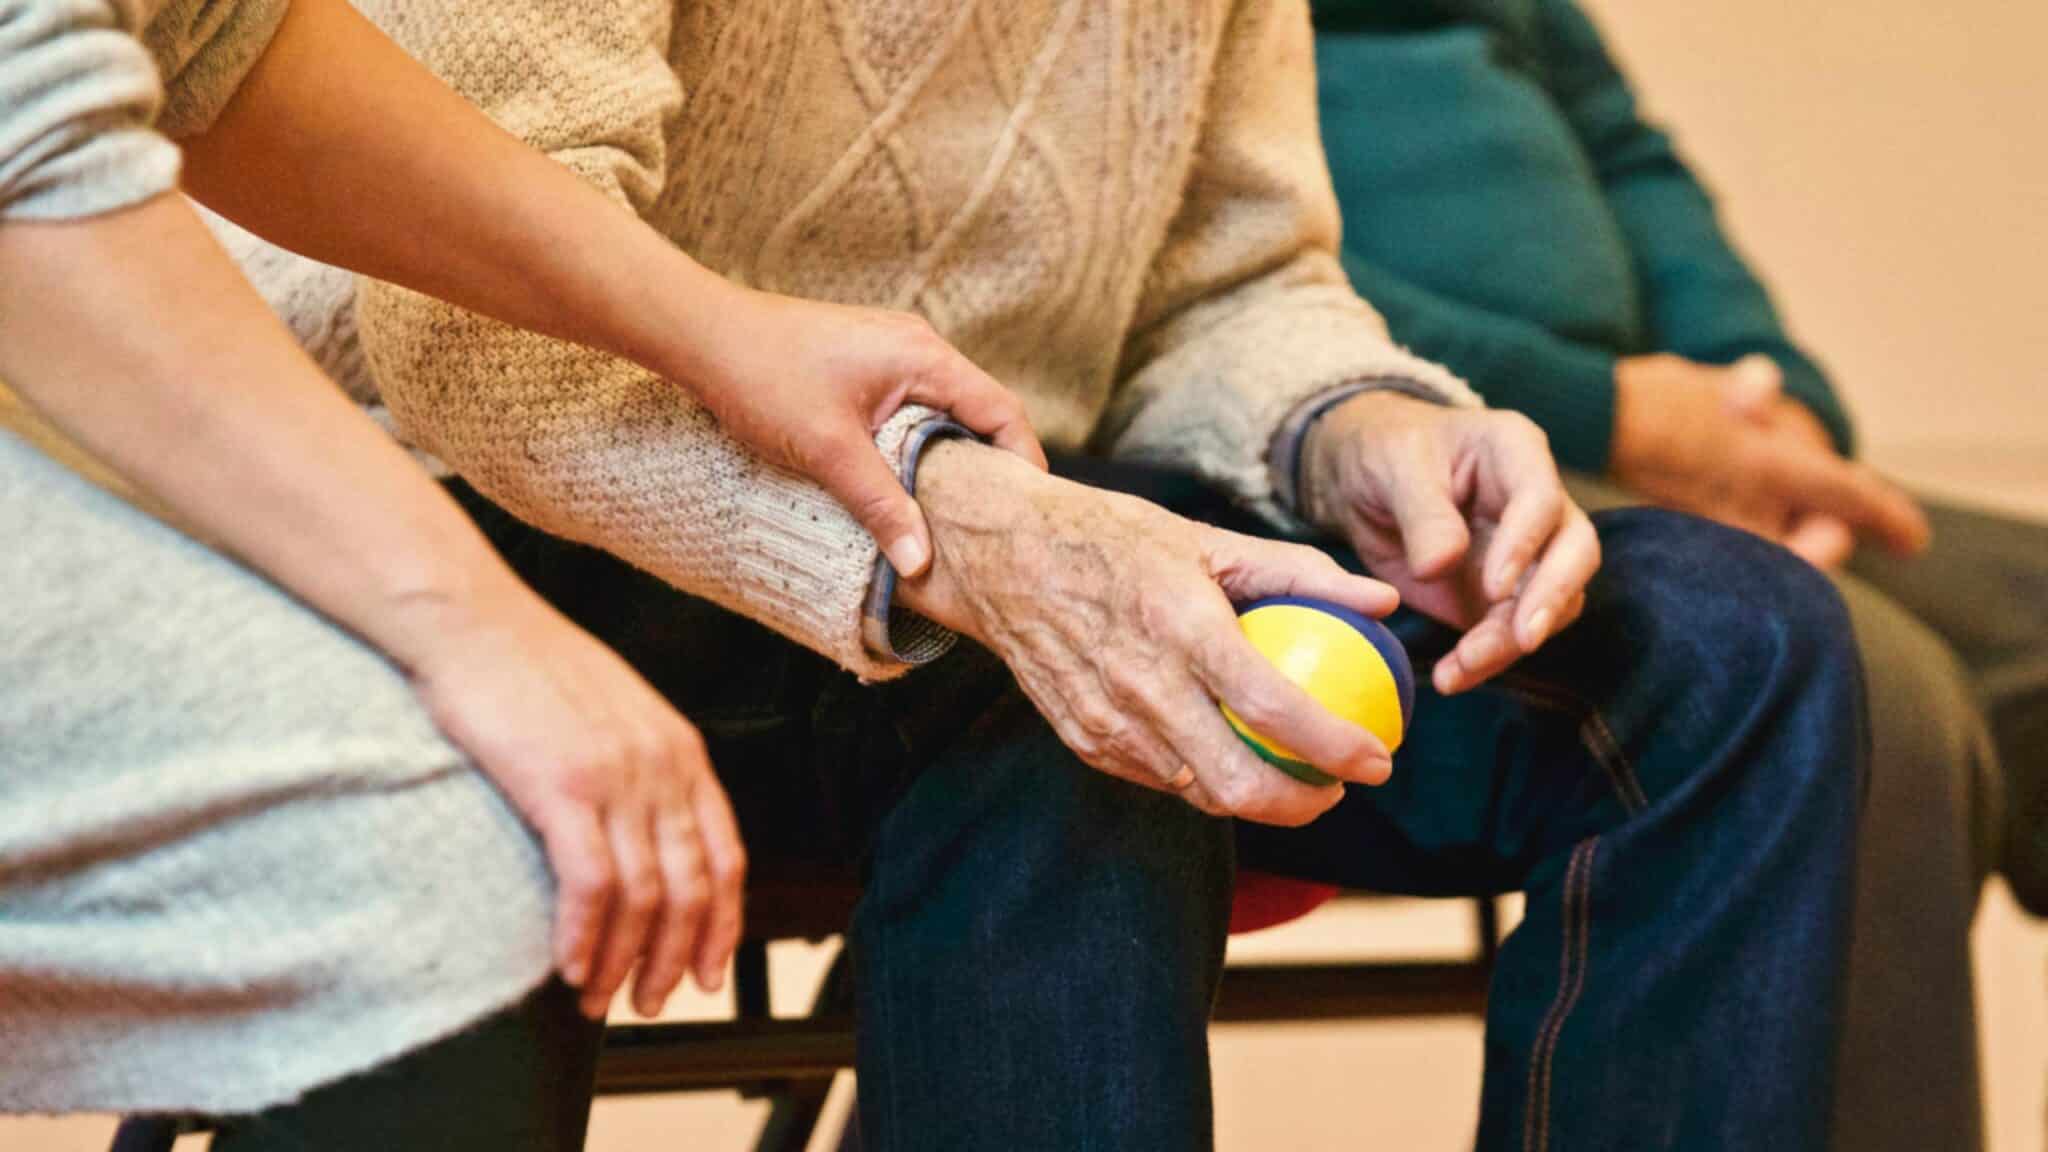 nurse helping an elderly man | Photo by Matthias Zomer: https://www.pexels.com/photo/person-holding-a-stress-ball-339620/